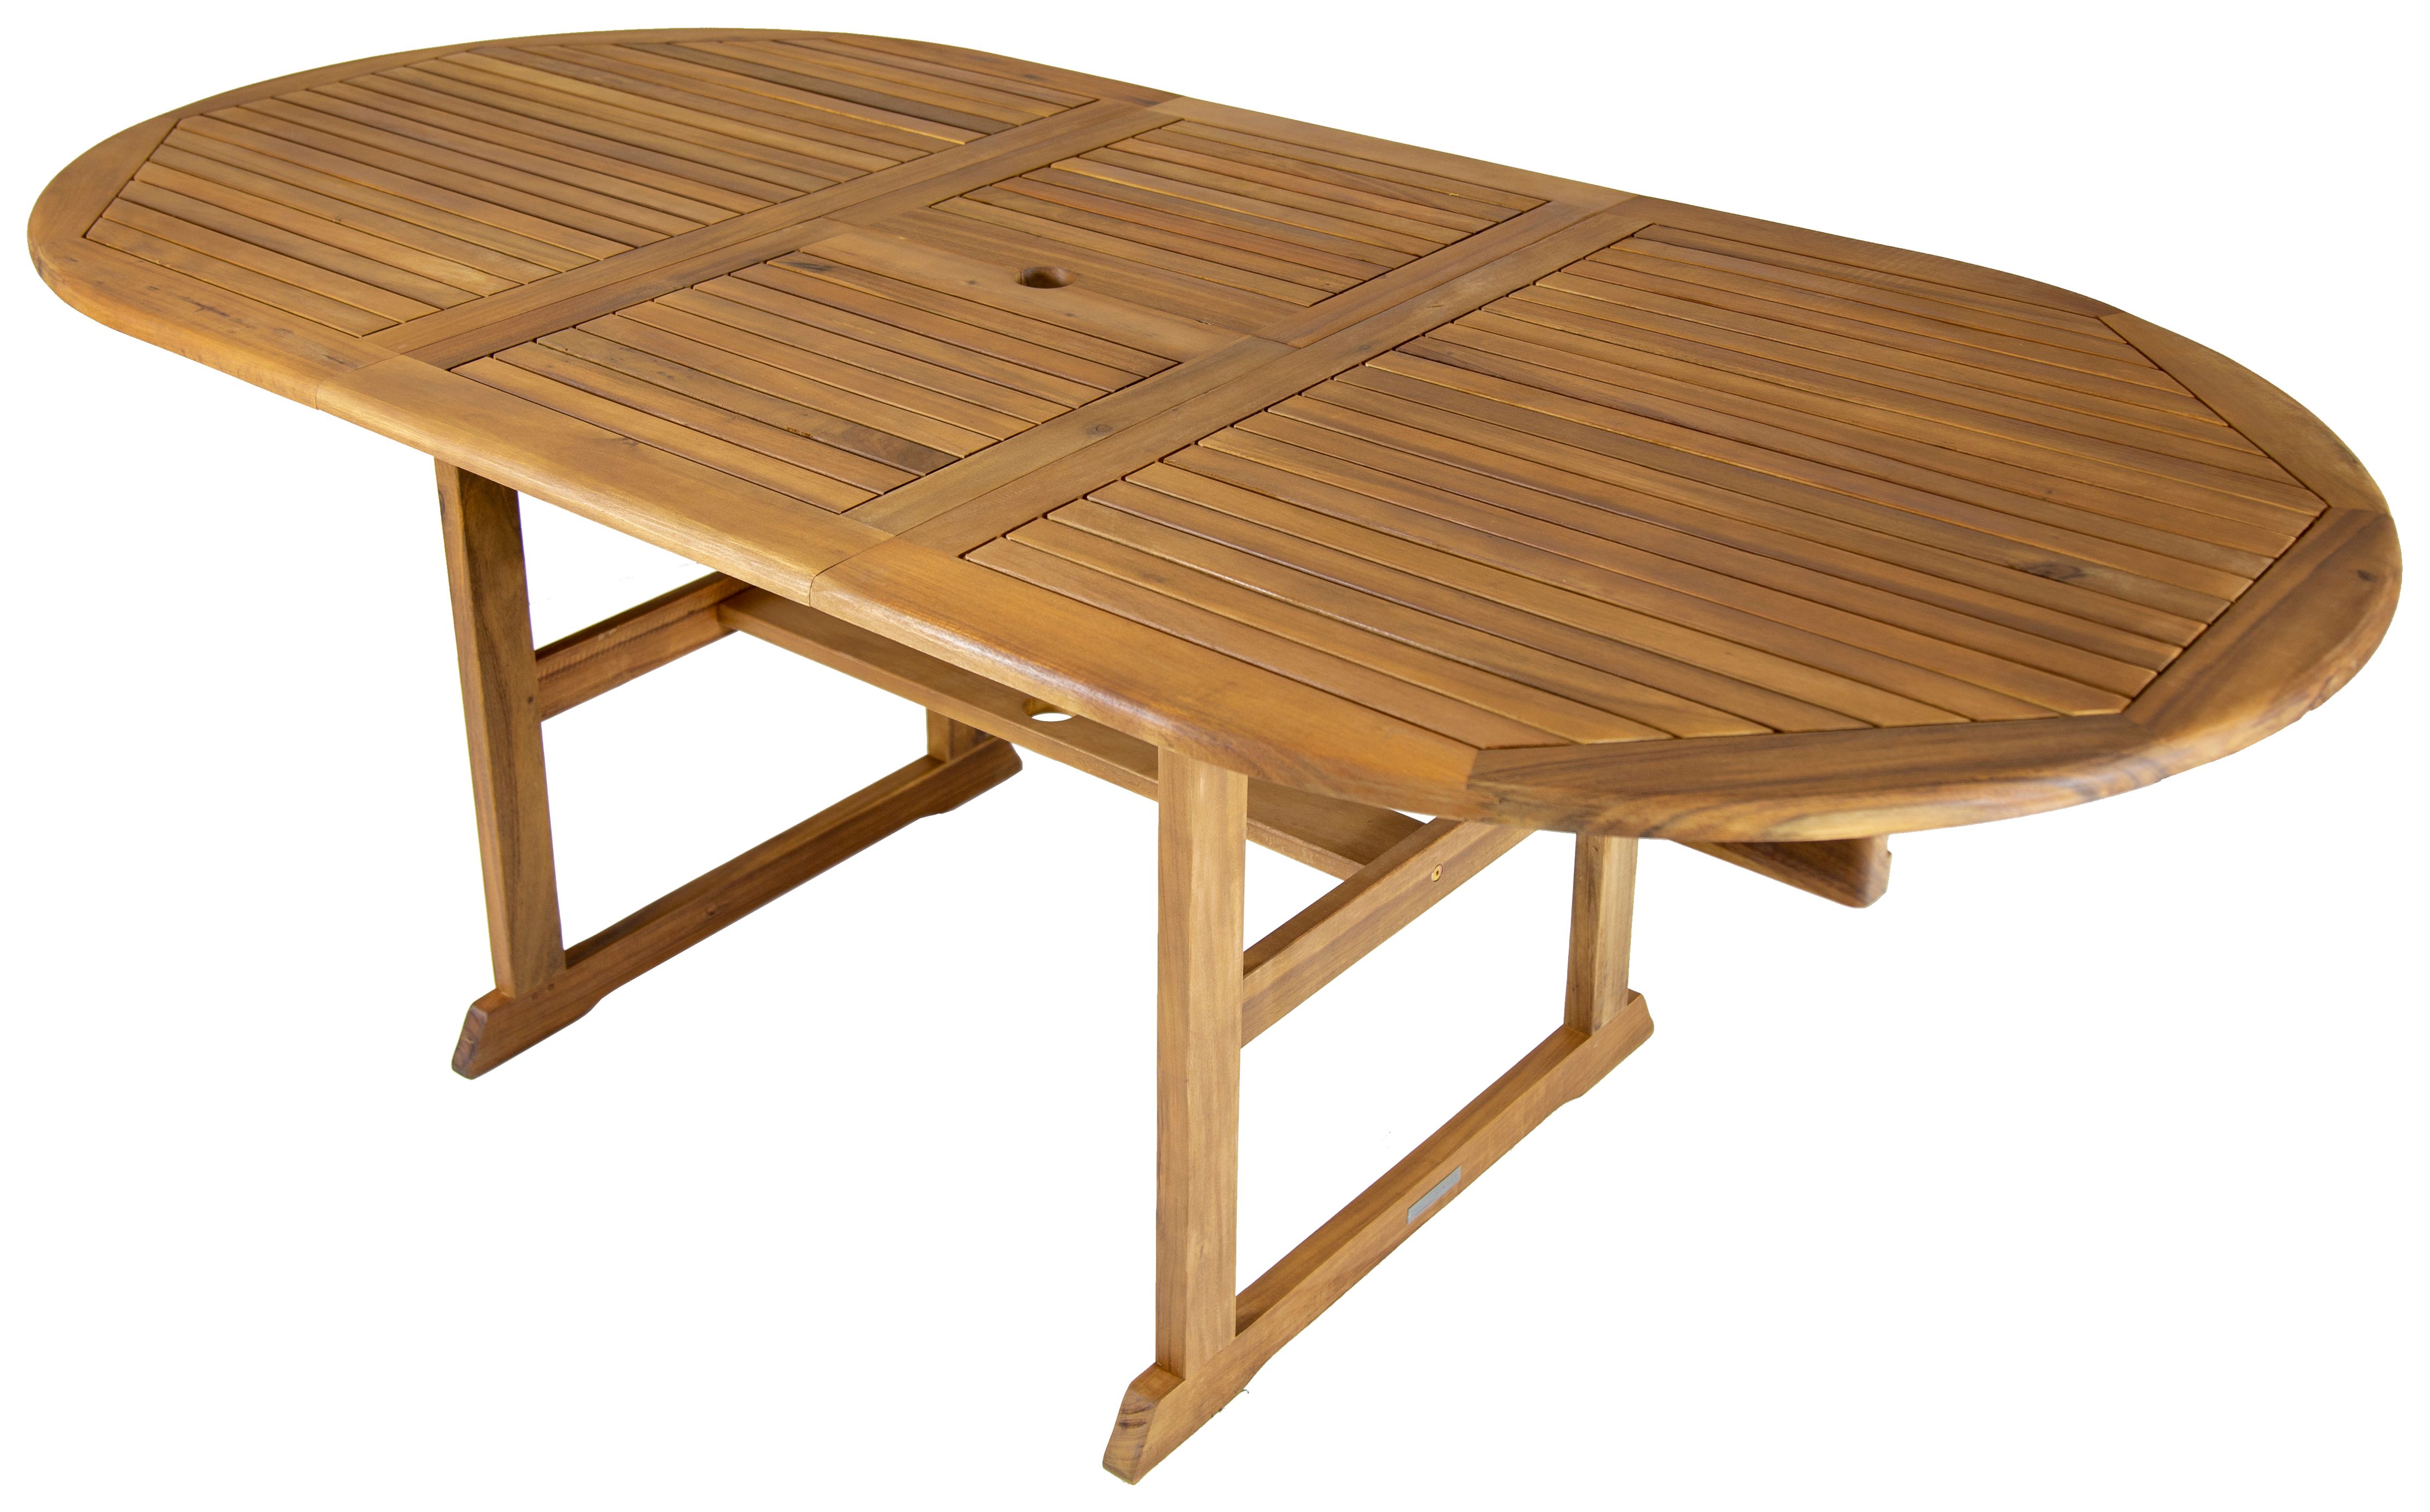 Image of Charles Bentley Acacia Hardwood Oval Extendable Table